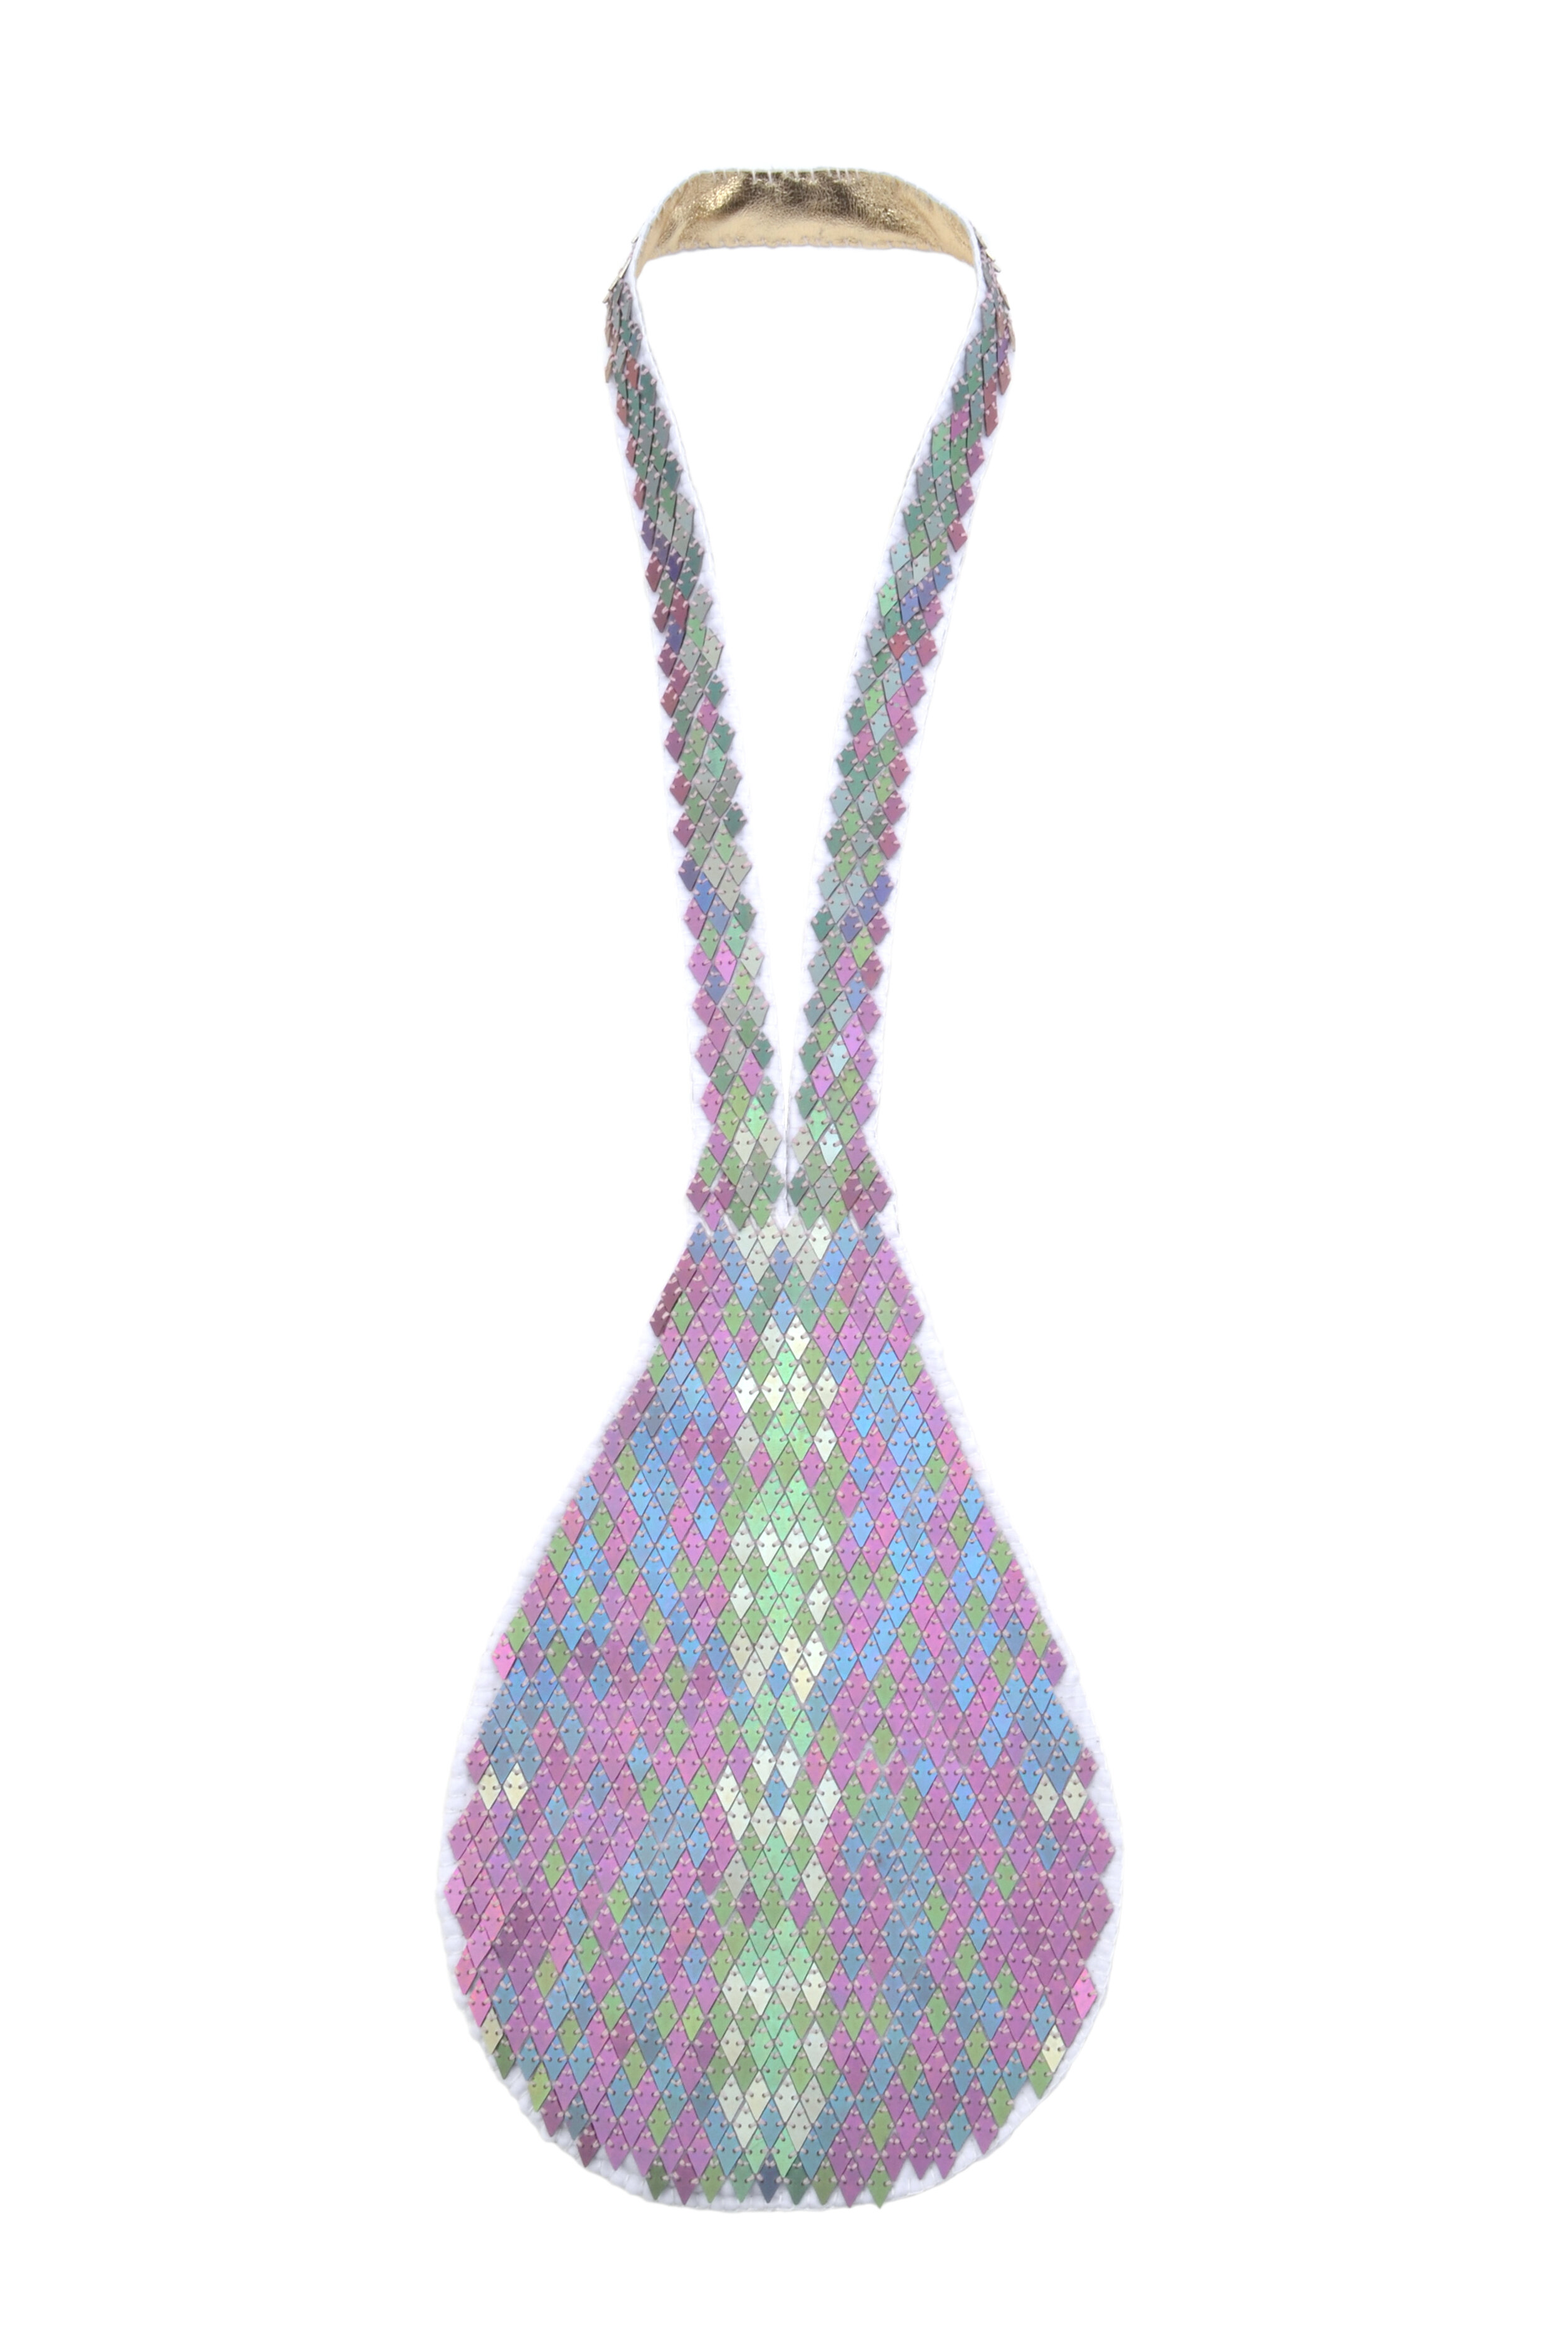   Magenta Snakeskin Necklace   Anodized Titanium, Leather, Cotton  26”x7”x.25”  2019 